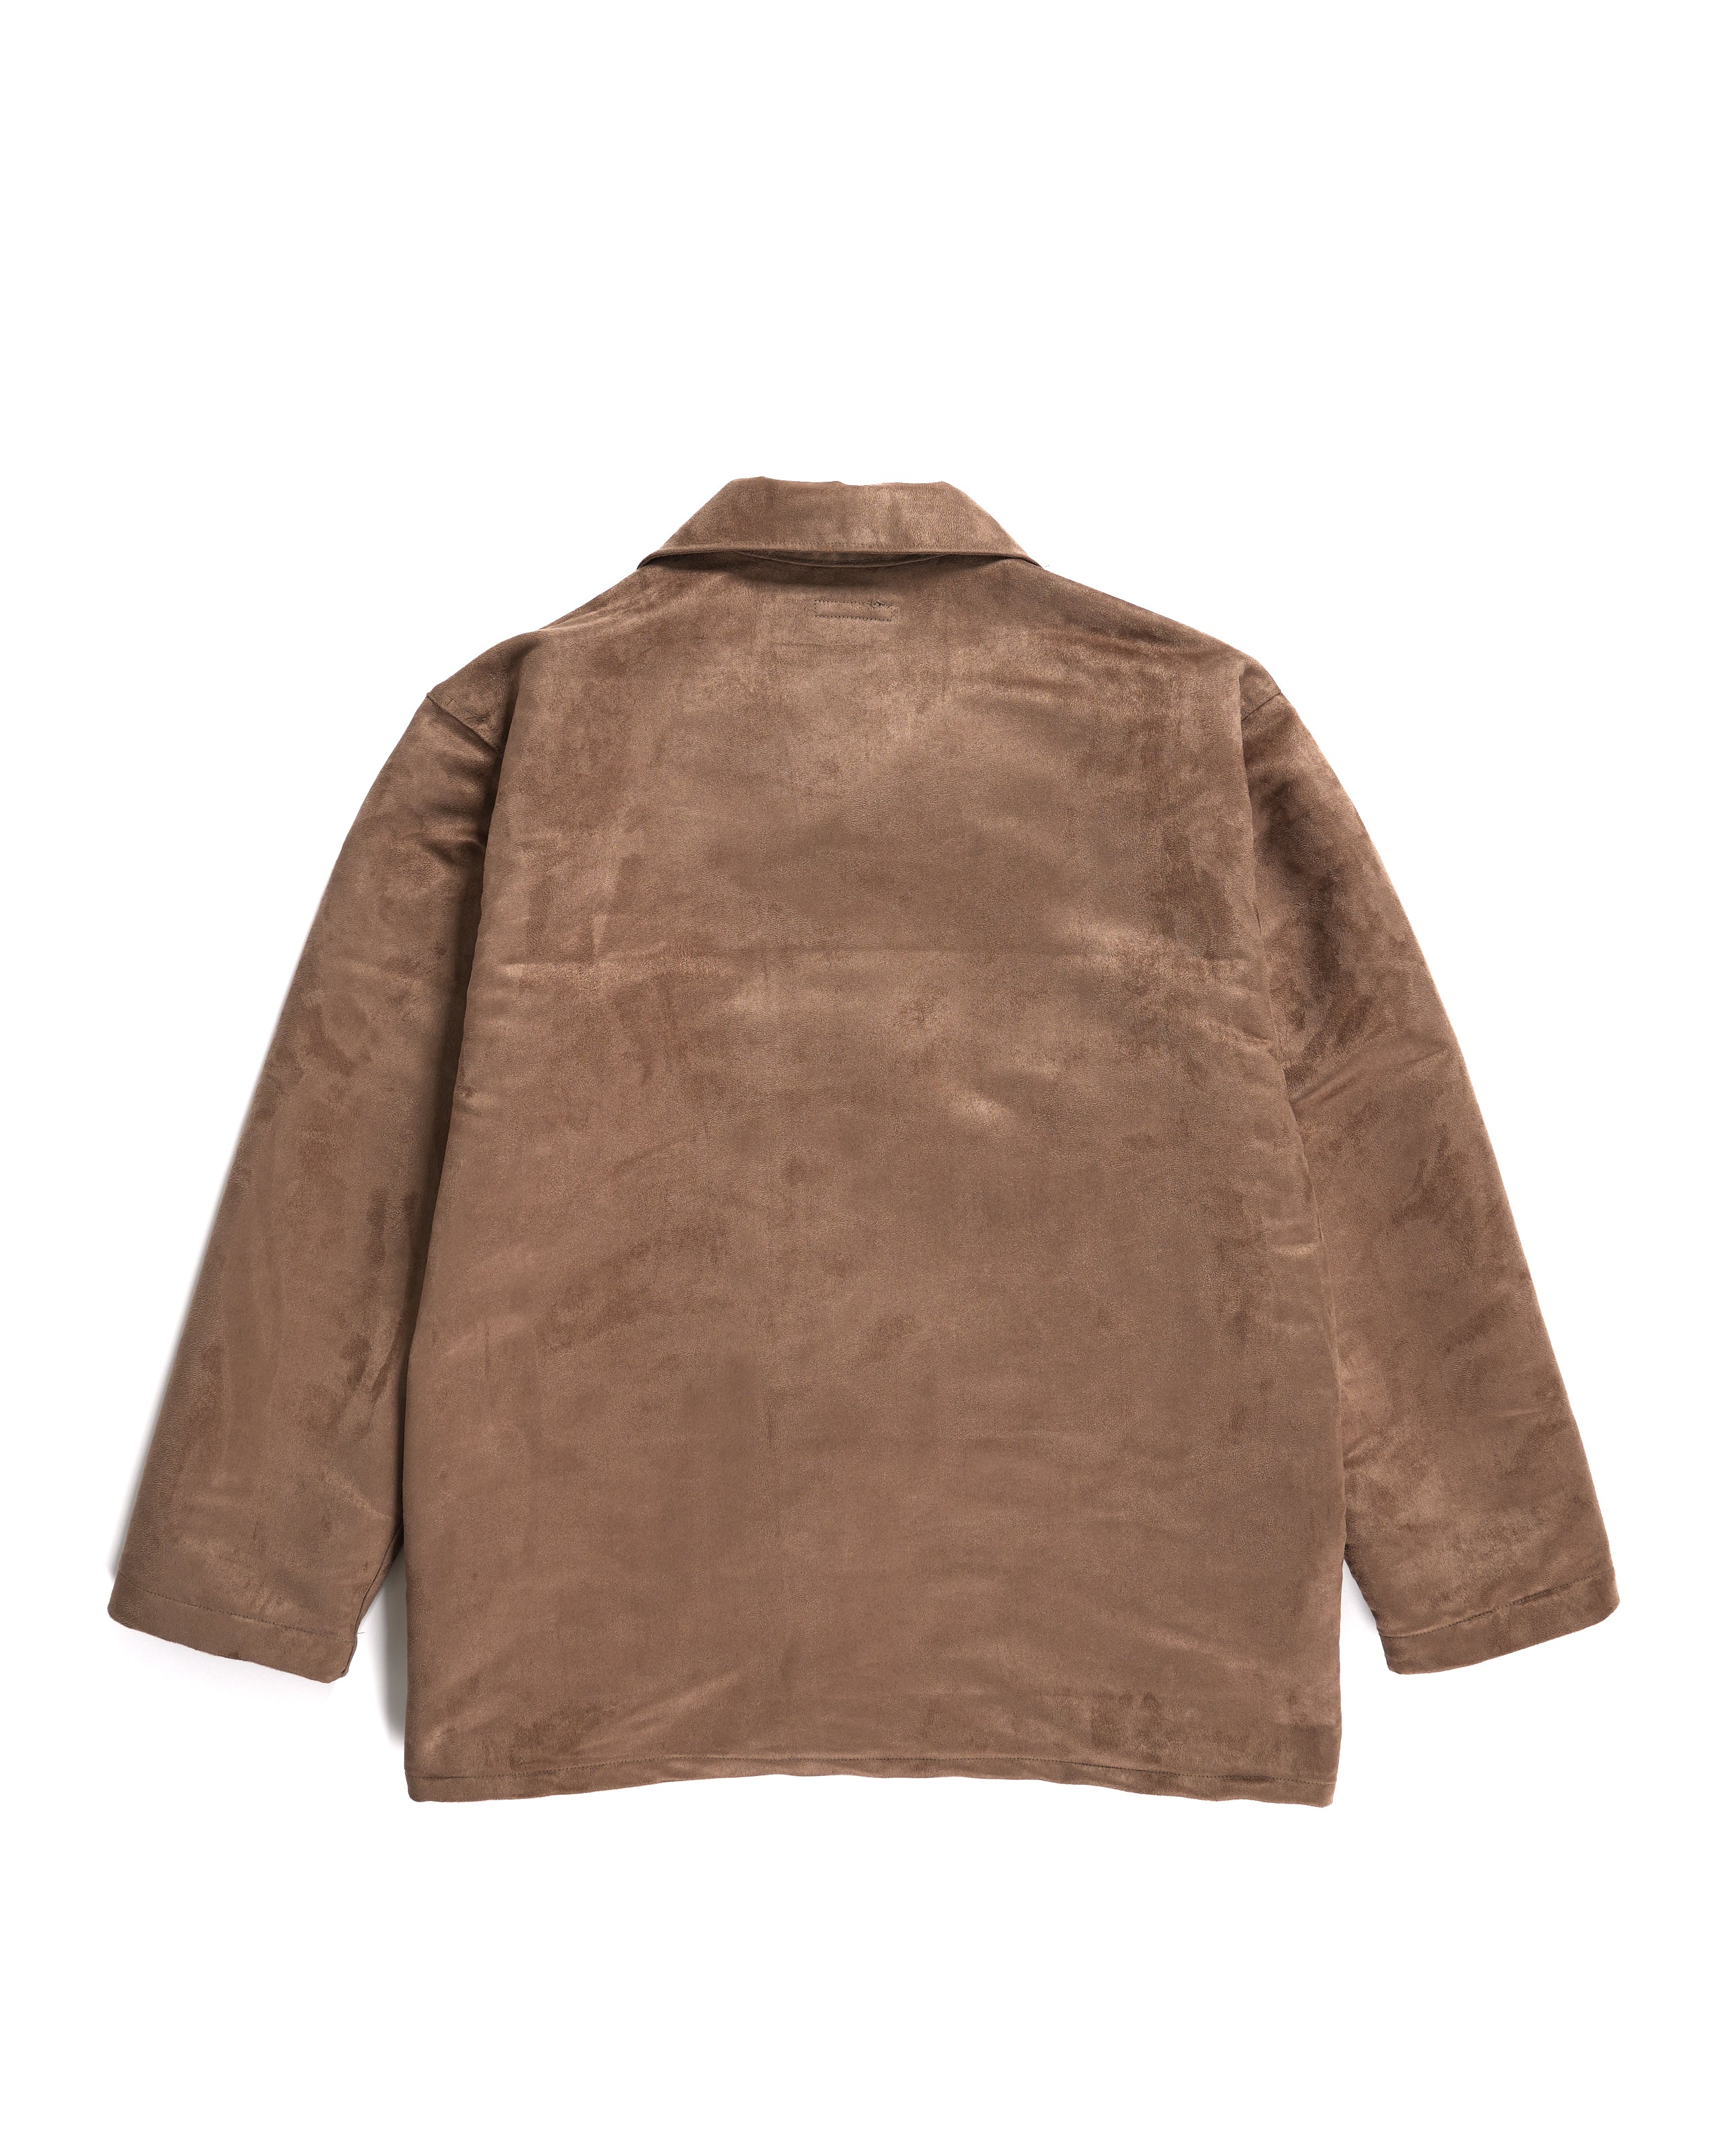 BA Shirt Jacket - Khaki Polyester Fake Suede